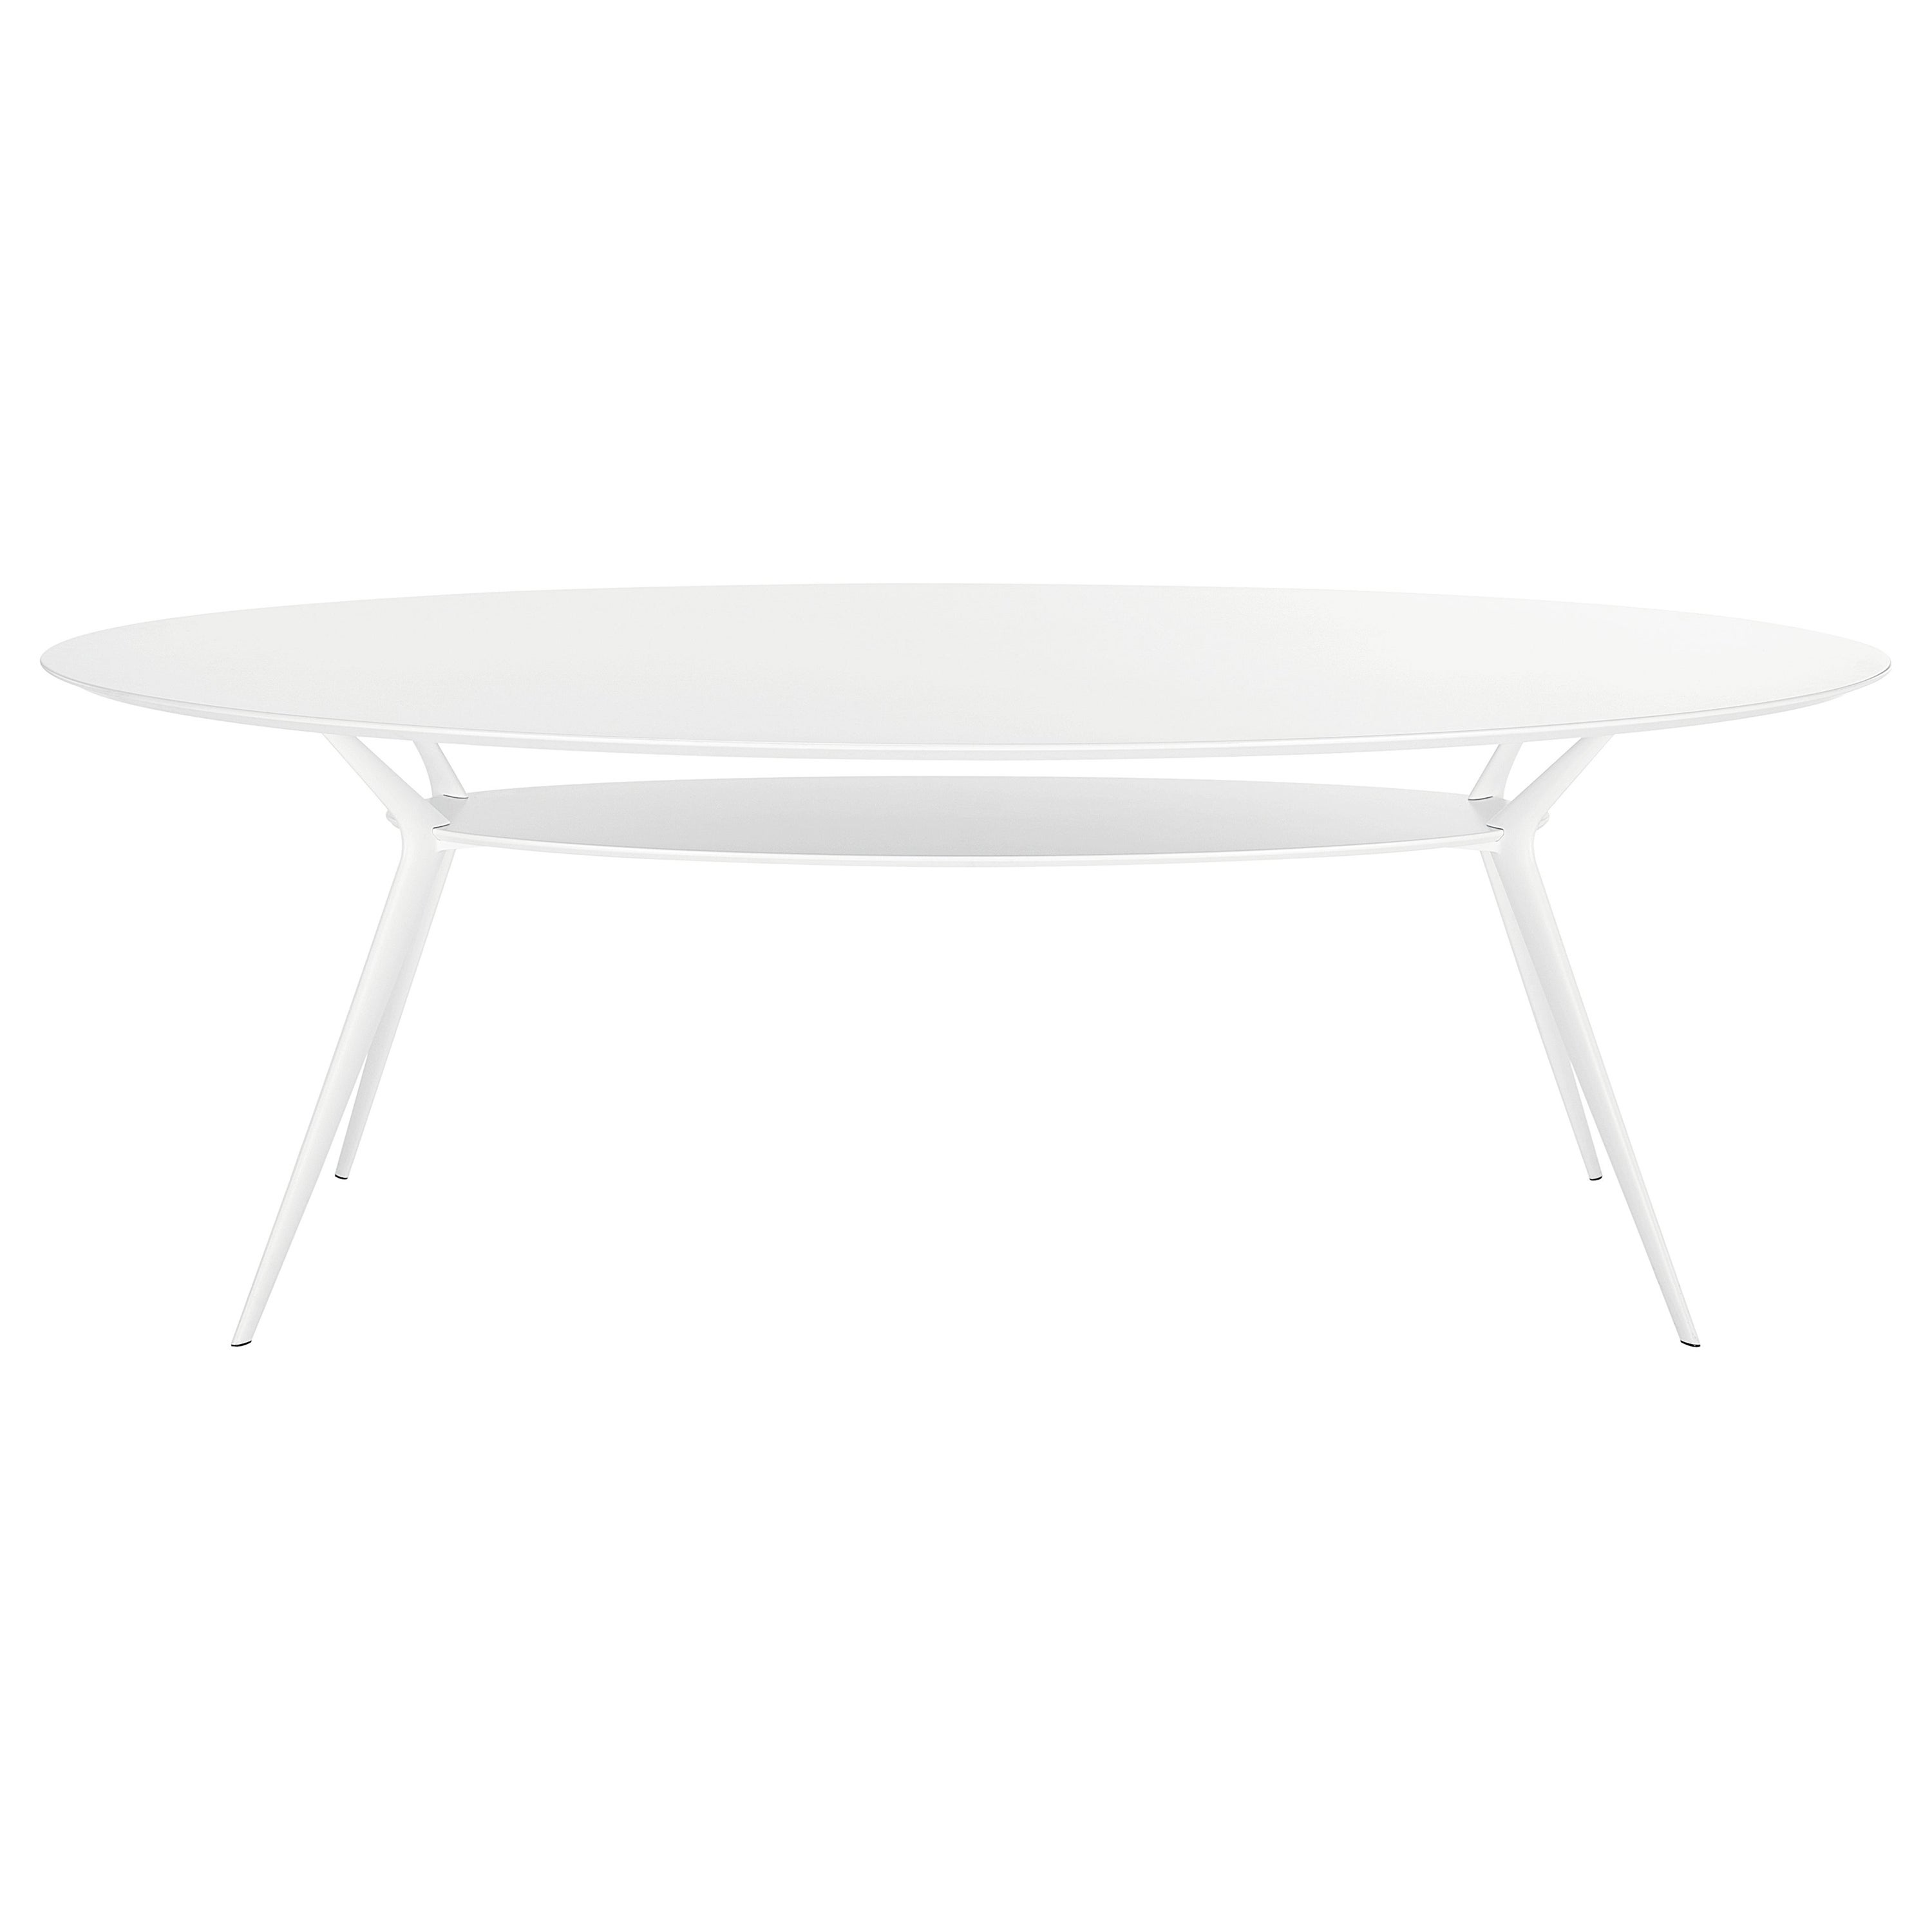 Table ovale Alias Biplane 407 avec plateau en MDF blanc et cadre en aluminium poli blanc